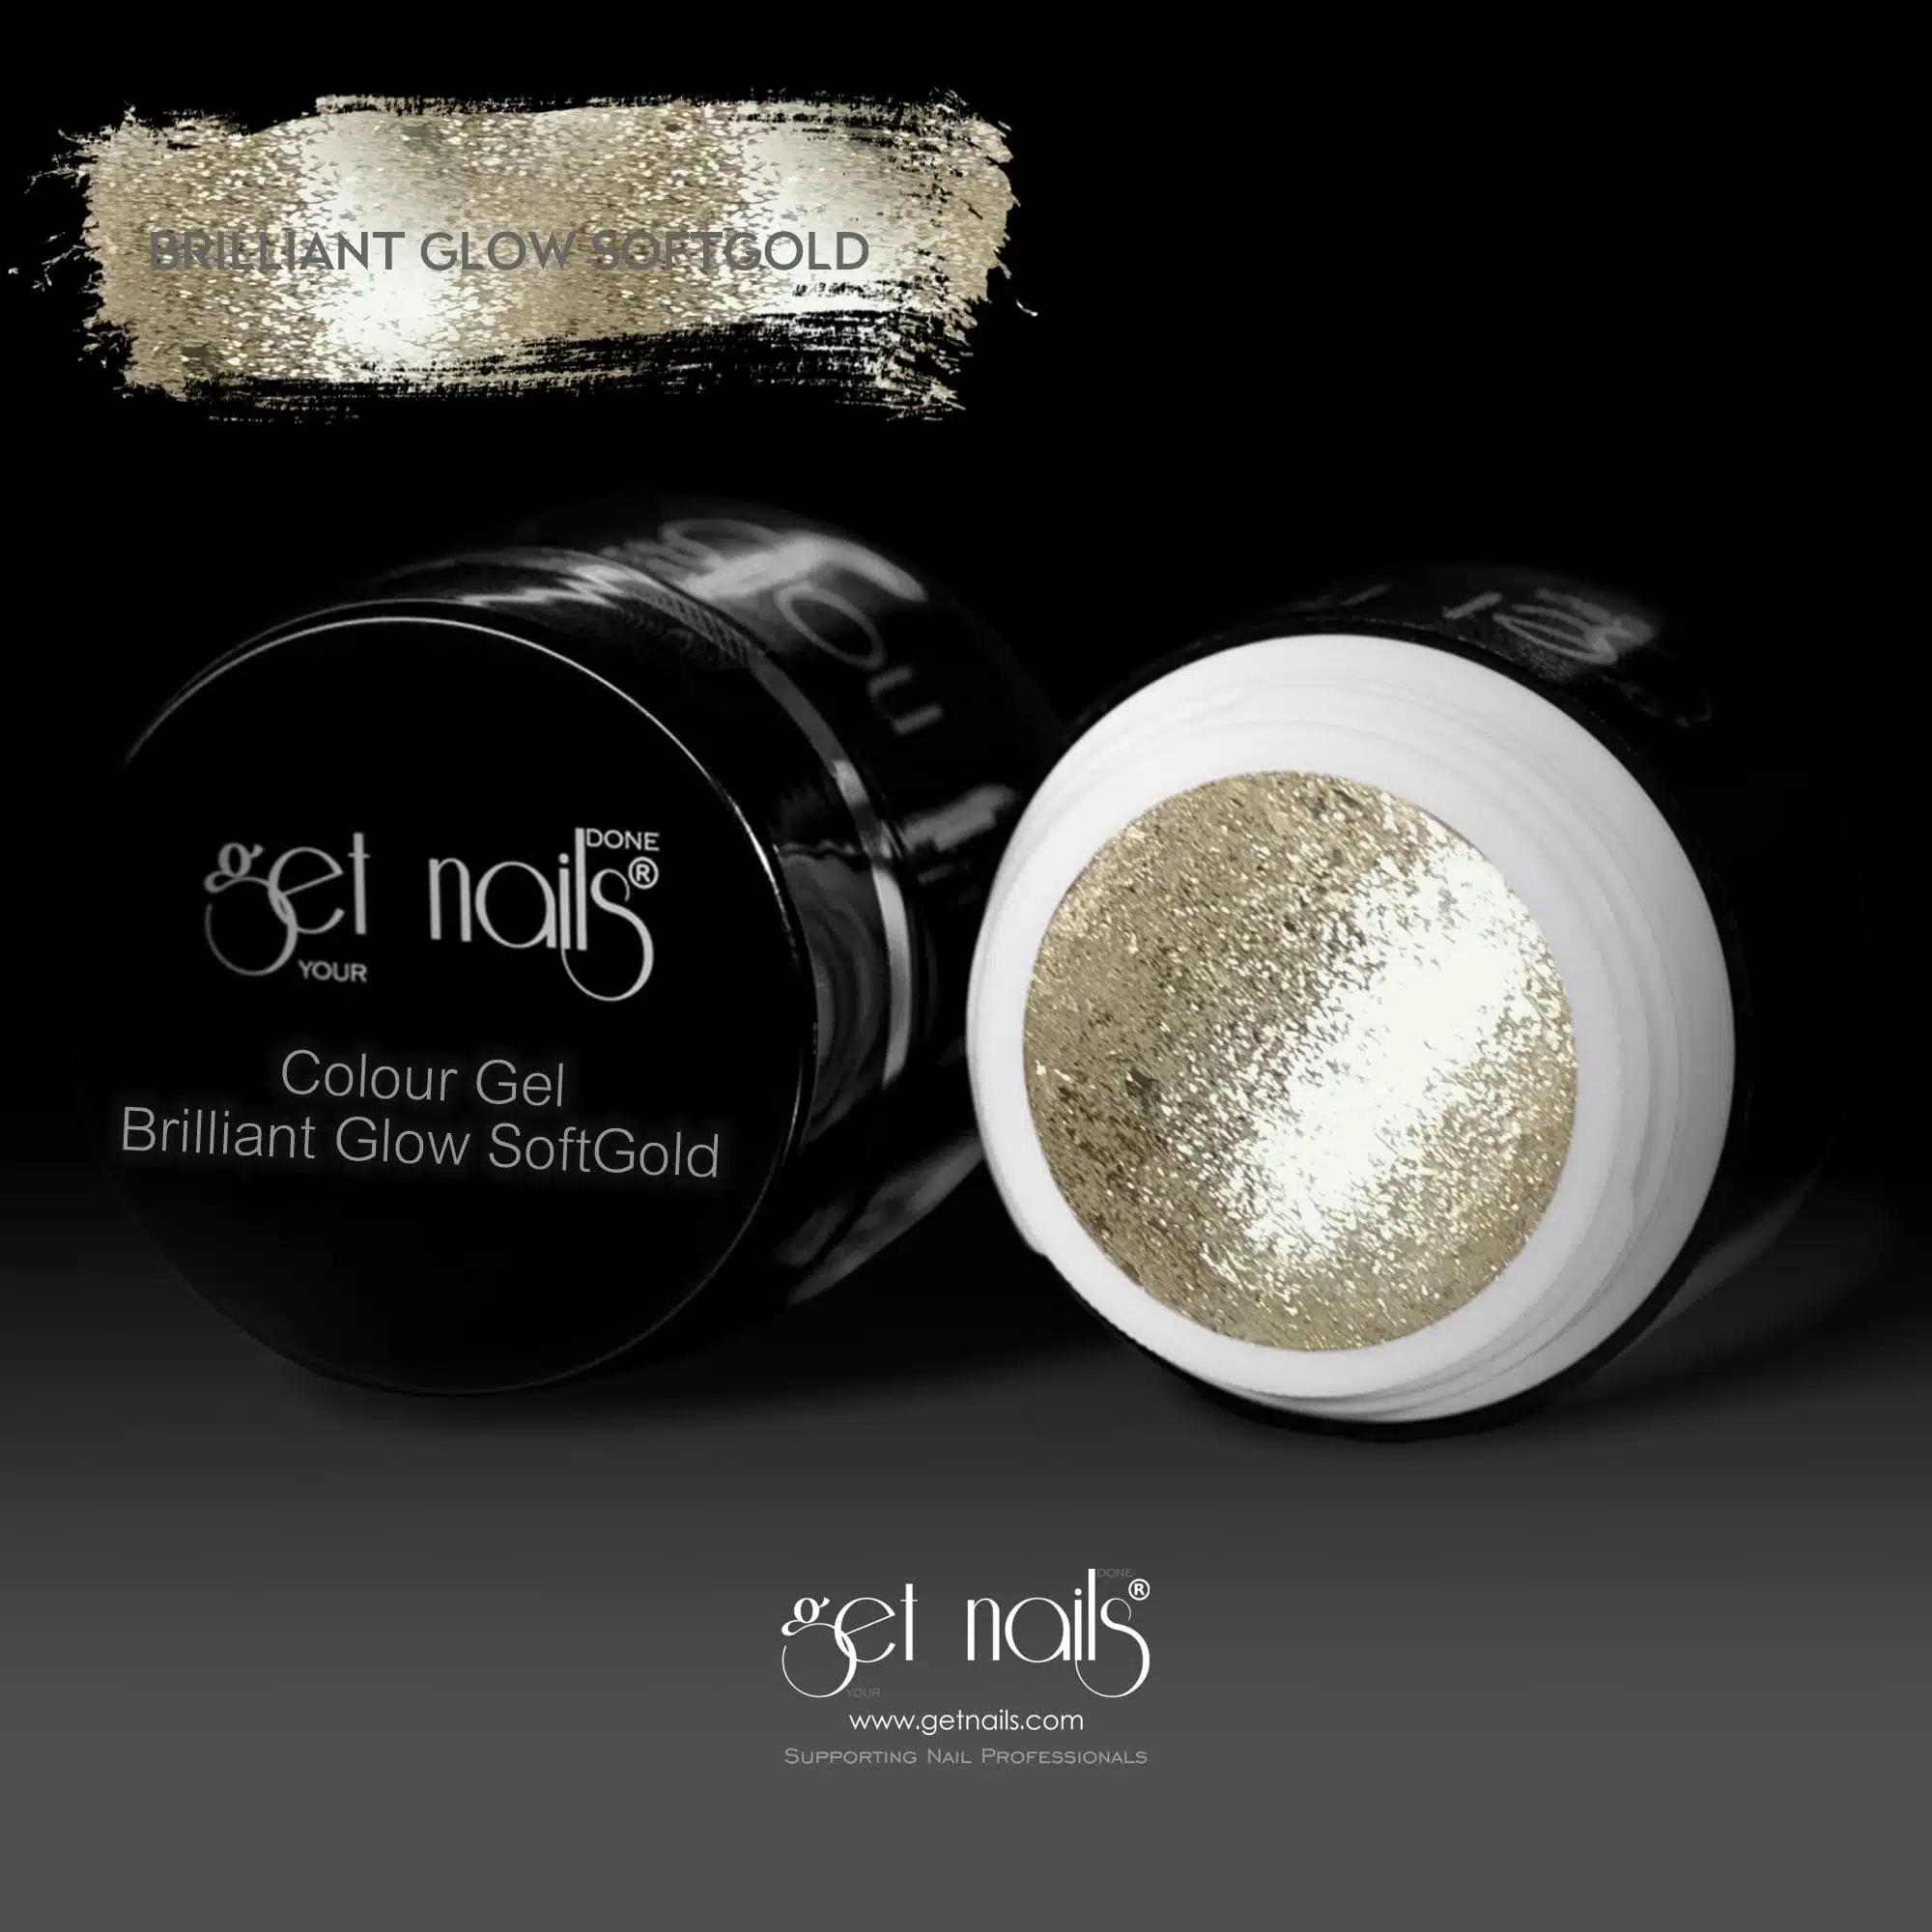 Get Nails Austria - Цветной гель Brilliant Glow Soft Gold 5g